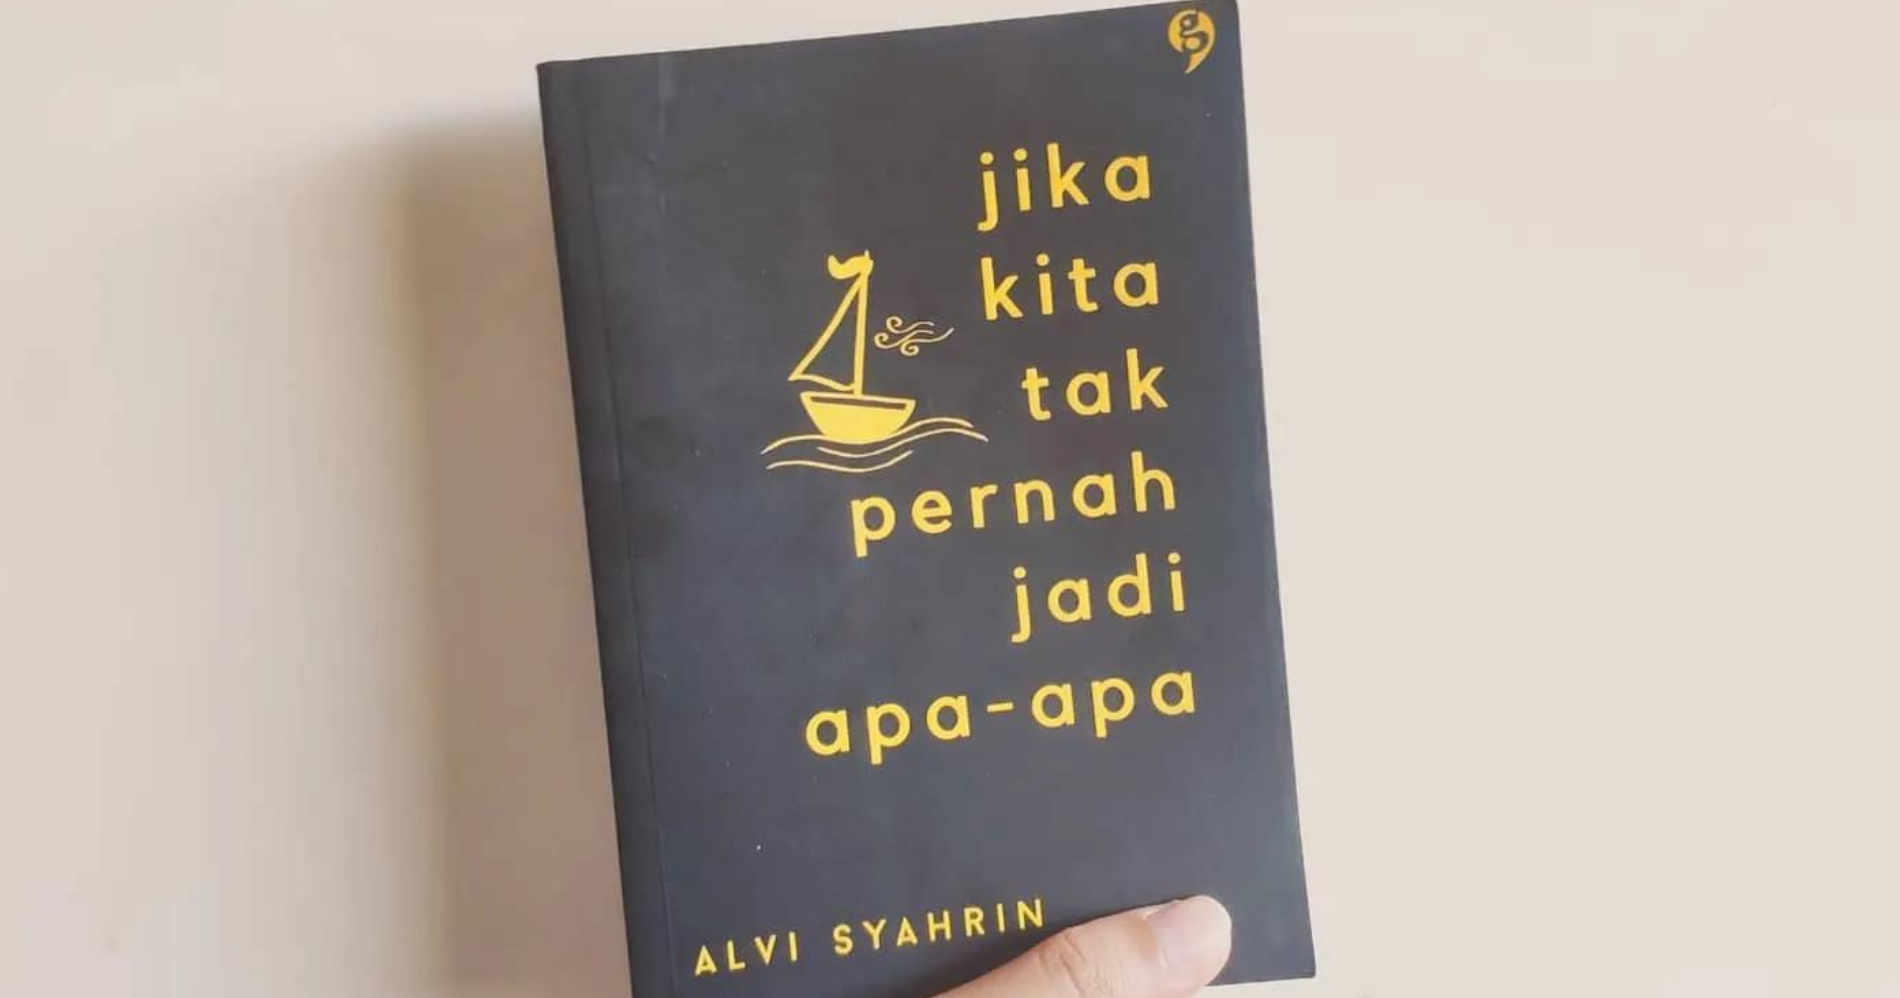 Buku Jika Kita Tak Pernah Jadi Apa-Apa karya Alvi Syahrin (Sumber gambar: Instagram.com/alvisyhrn)